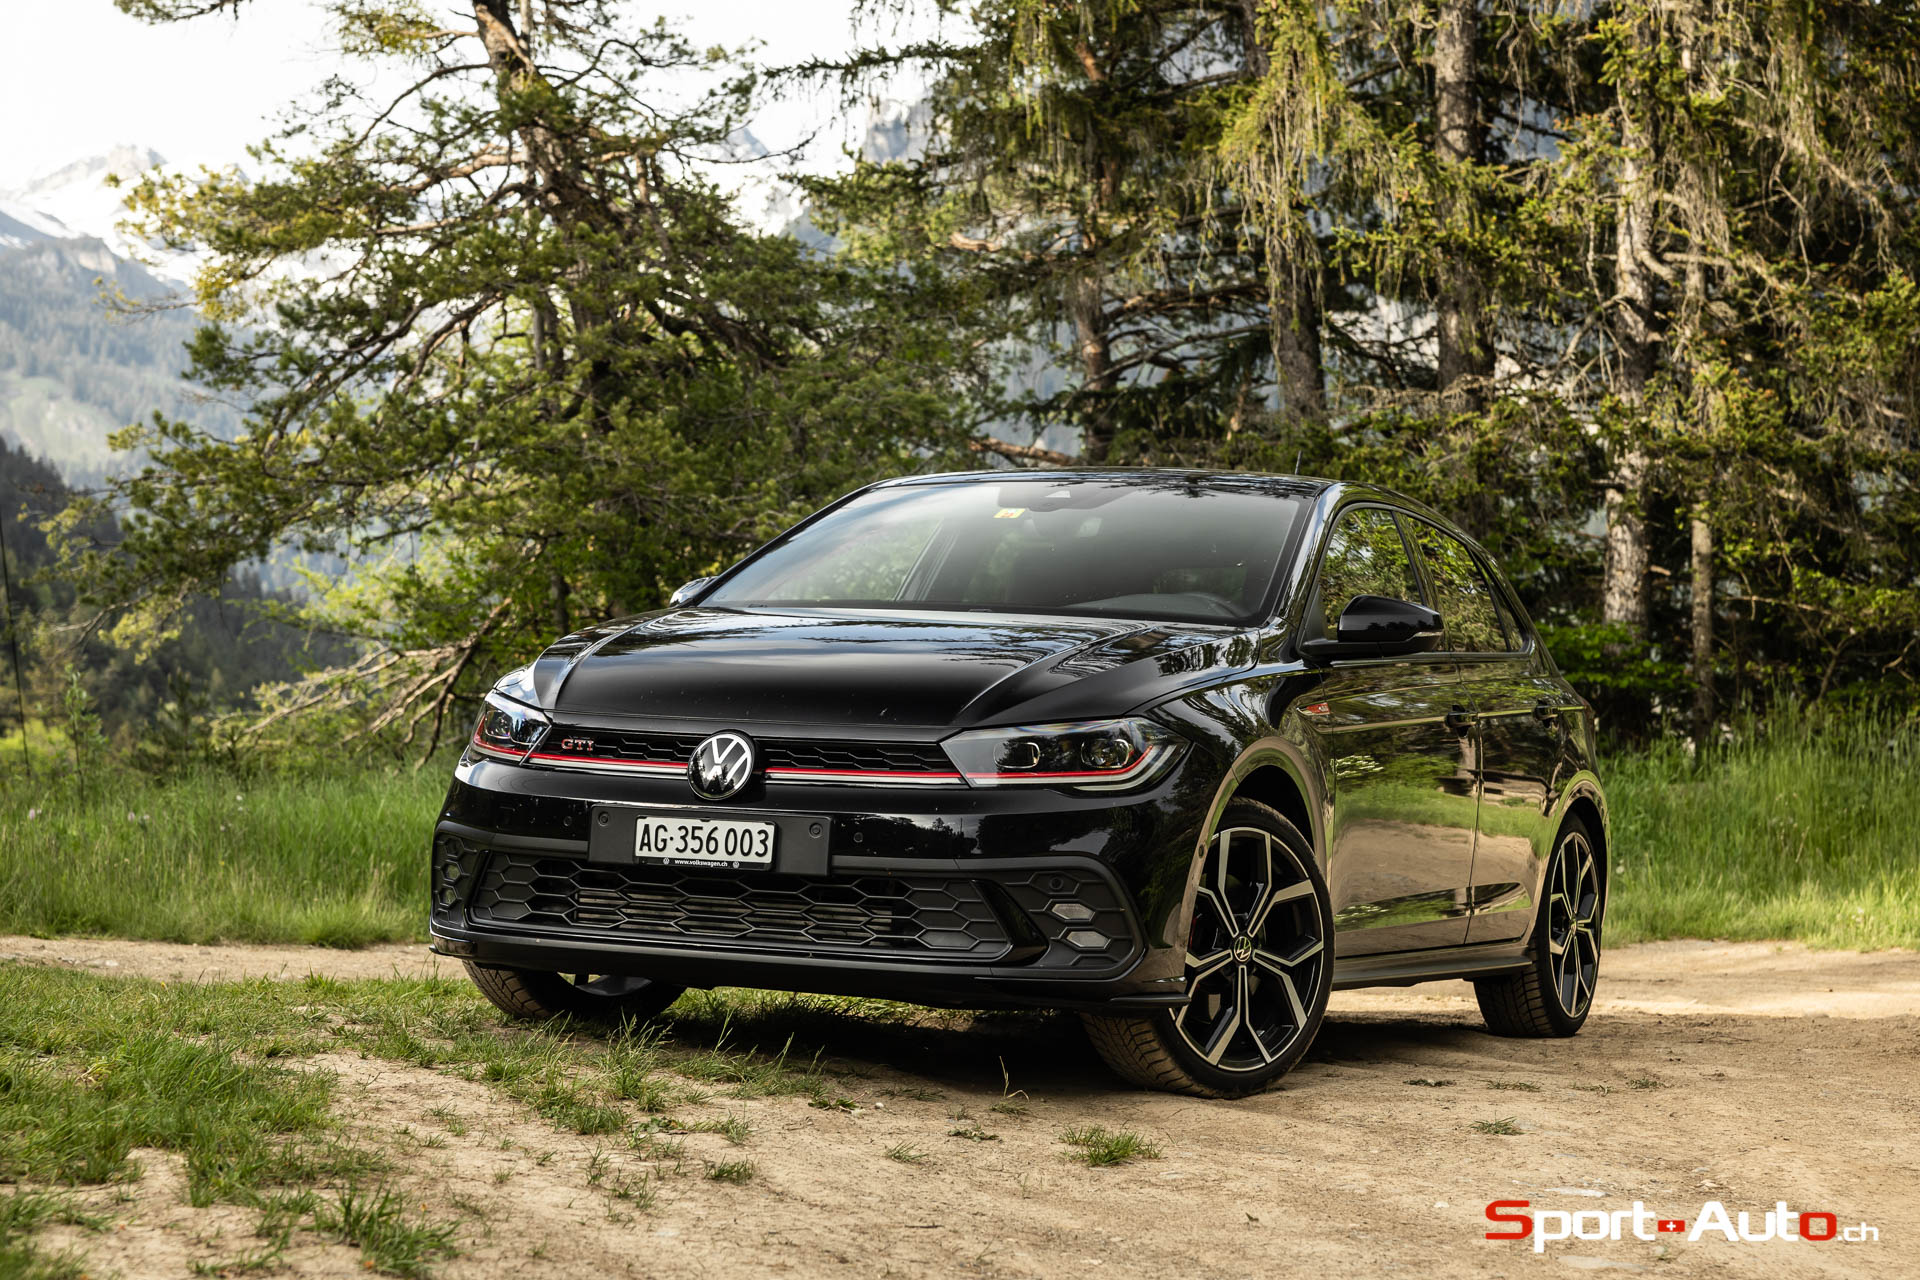 Essai Volkswagen Polo GTI (2018) : notre avis sur la nouvelle Polo GTI